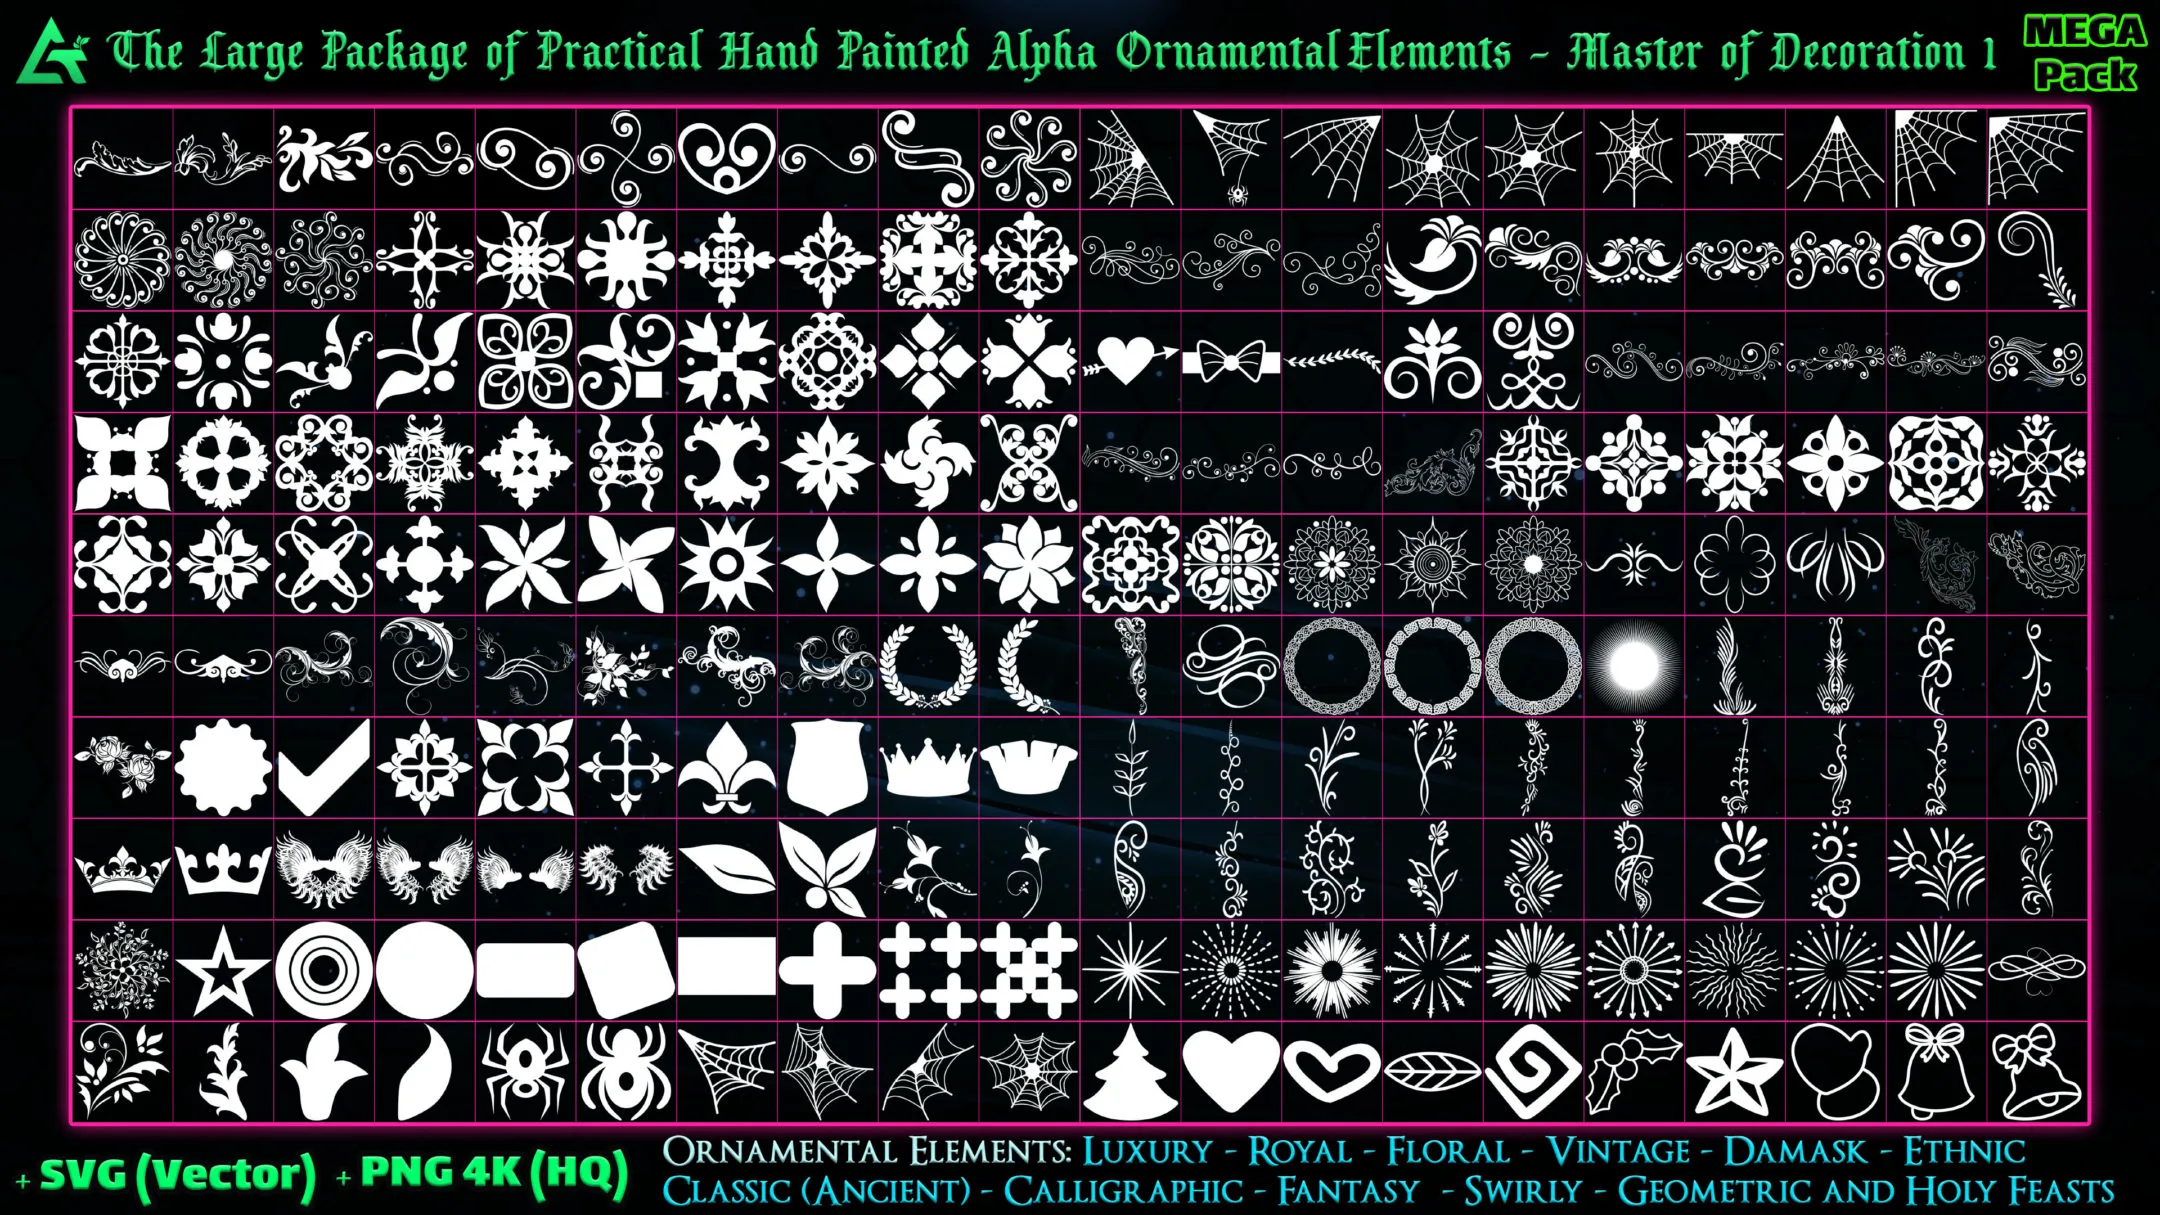 4350 Hand Painted Alpha Ornamental Elements - Master of Decoration 1 (MEGA Pack) - Vol 6